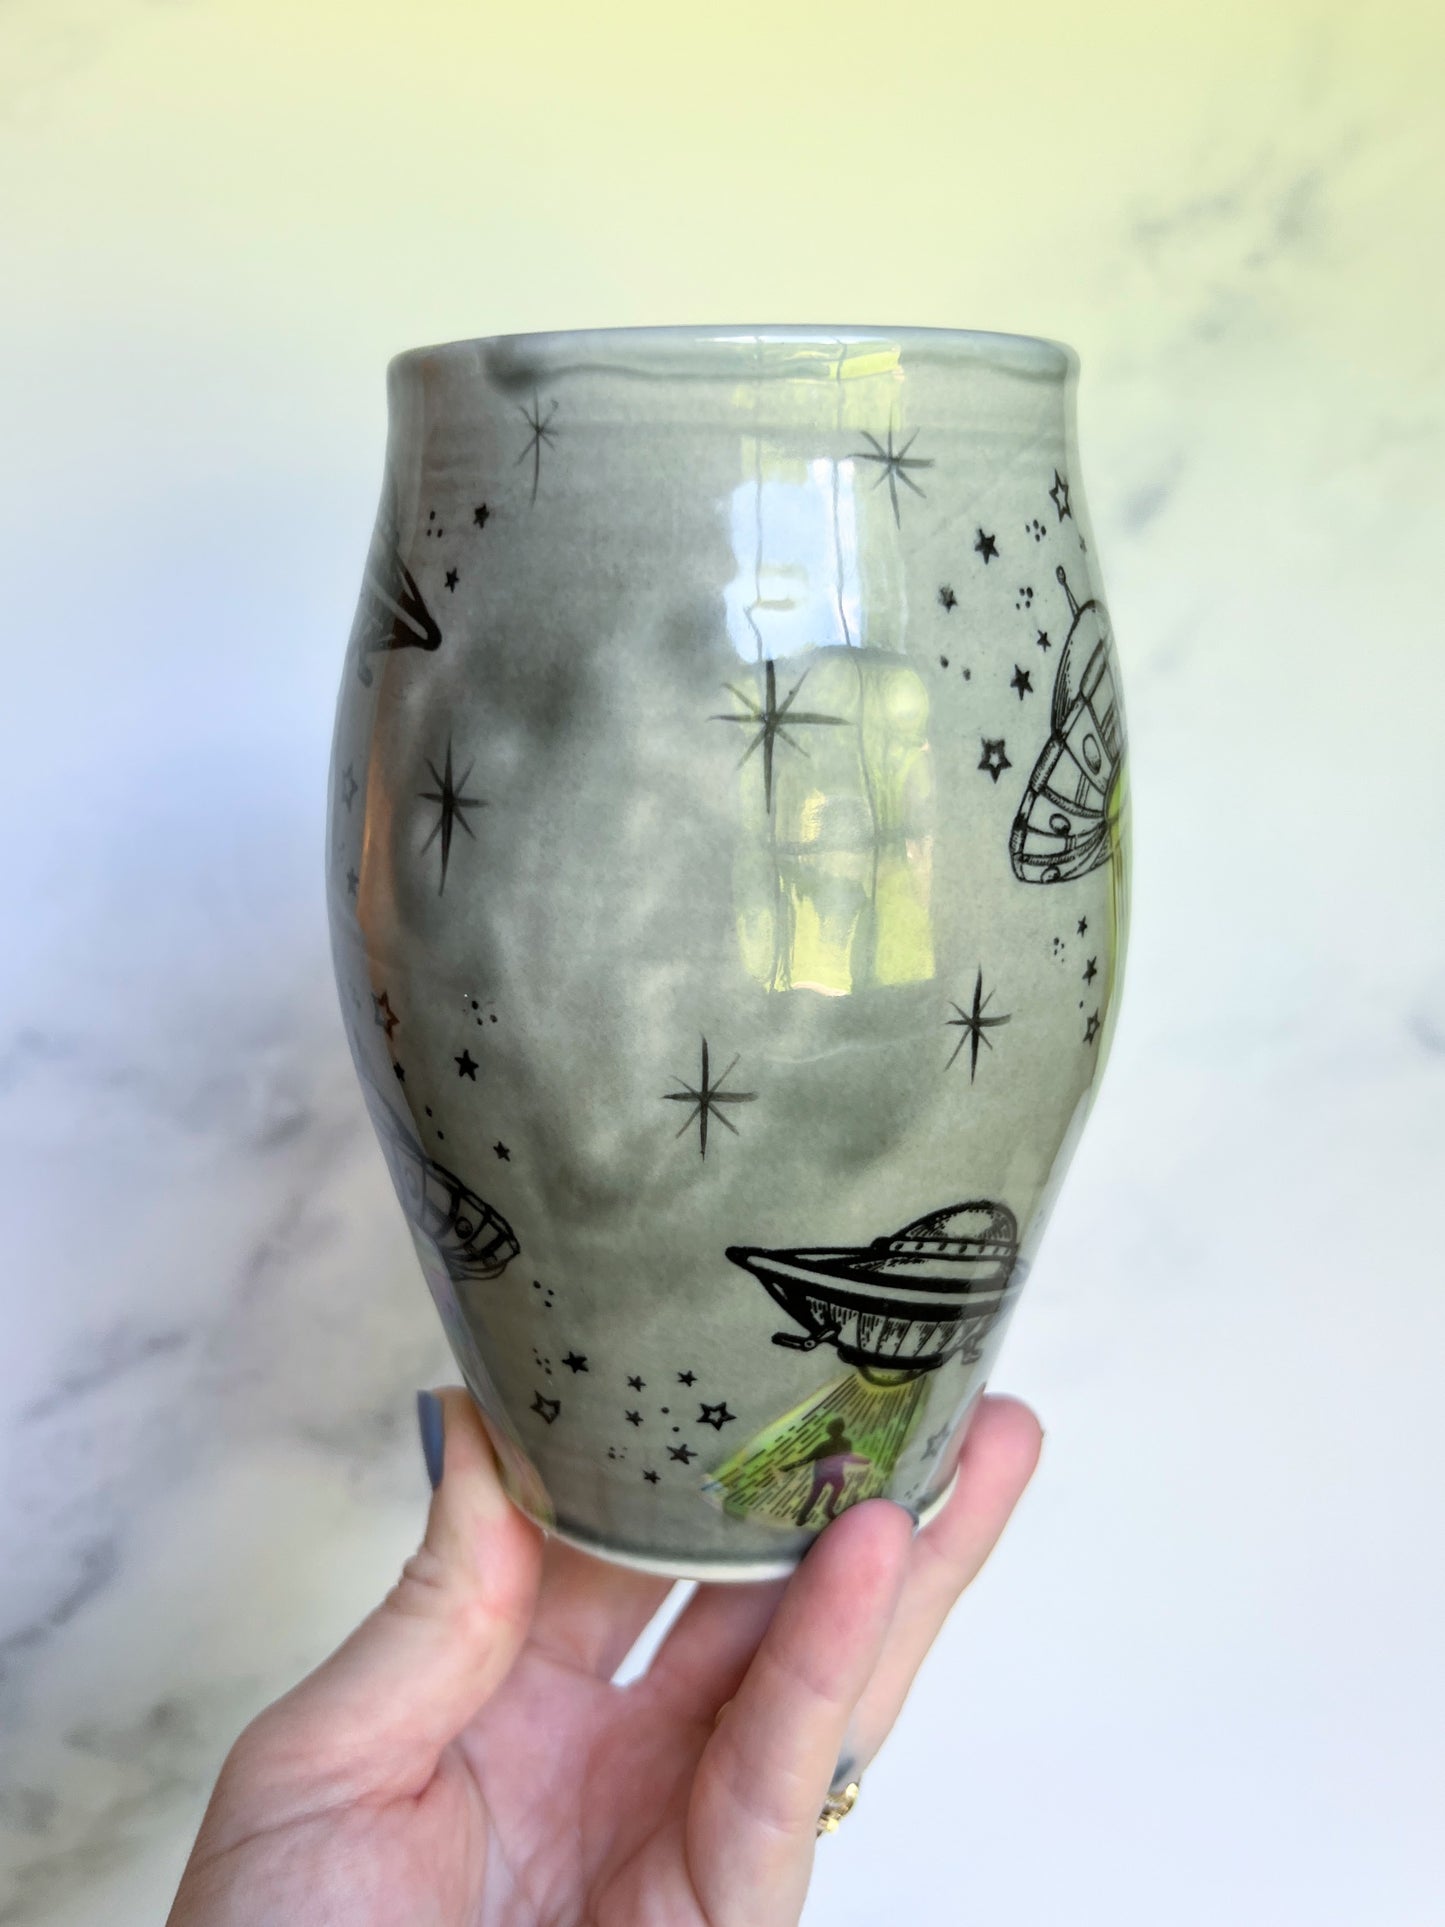 UFO Abduction Porcelain Mug, Pottery Mug, Hand Made Mug